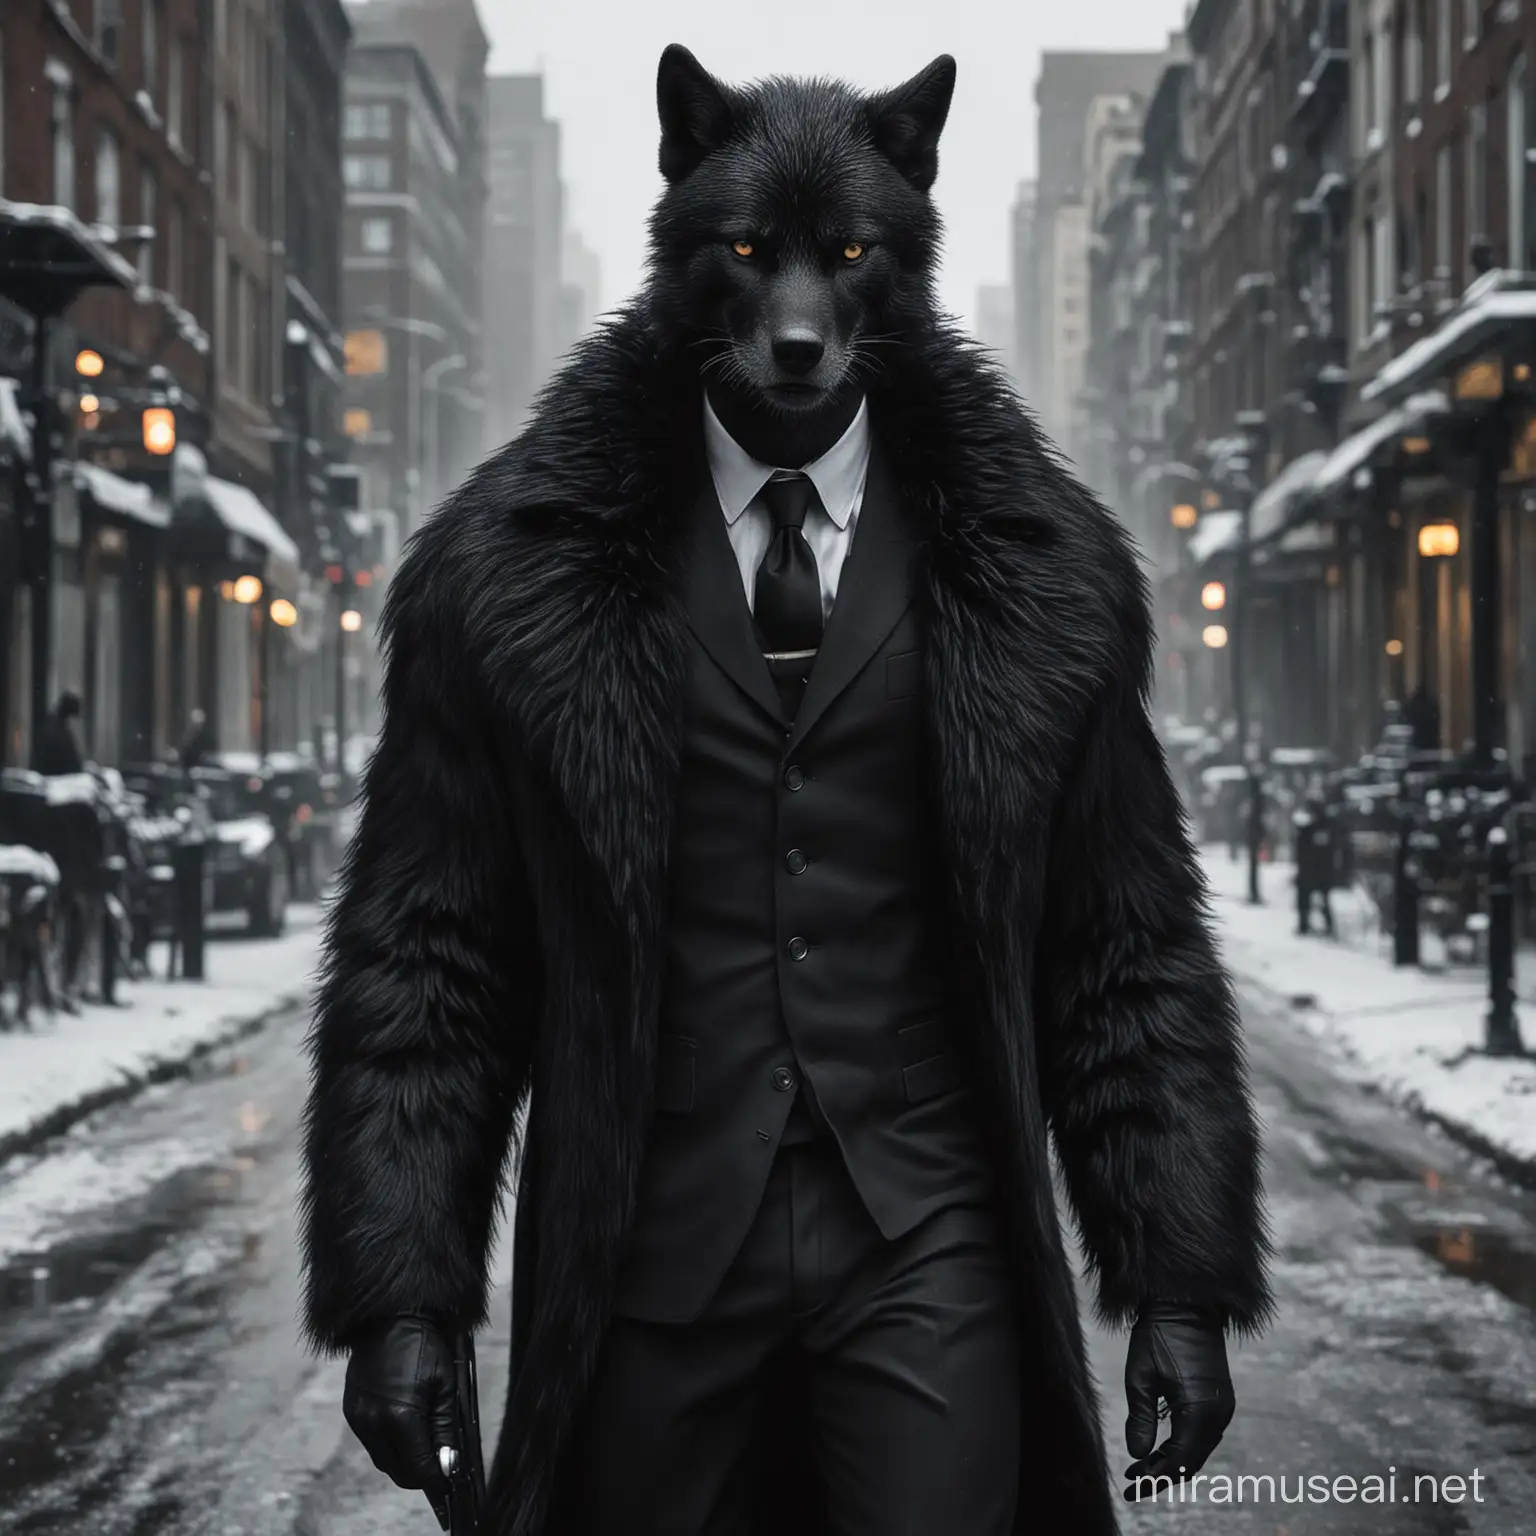 Majestic Lone Black Wolf with Classic White Mustache in Noir Cityscape